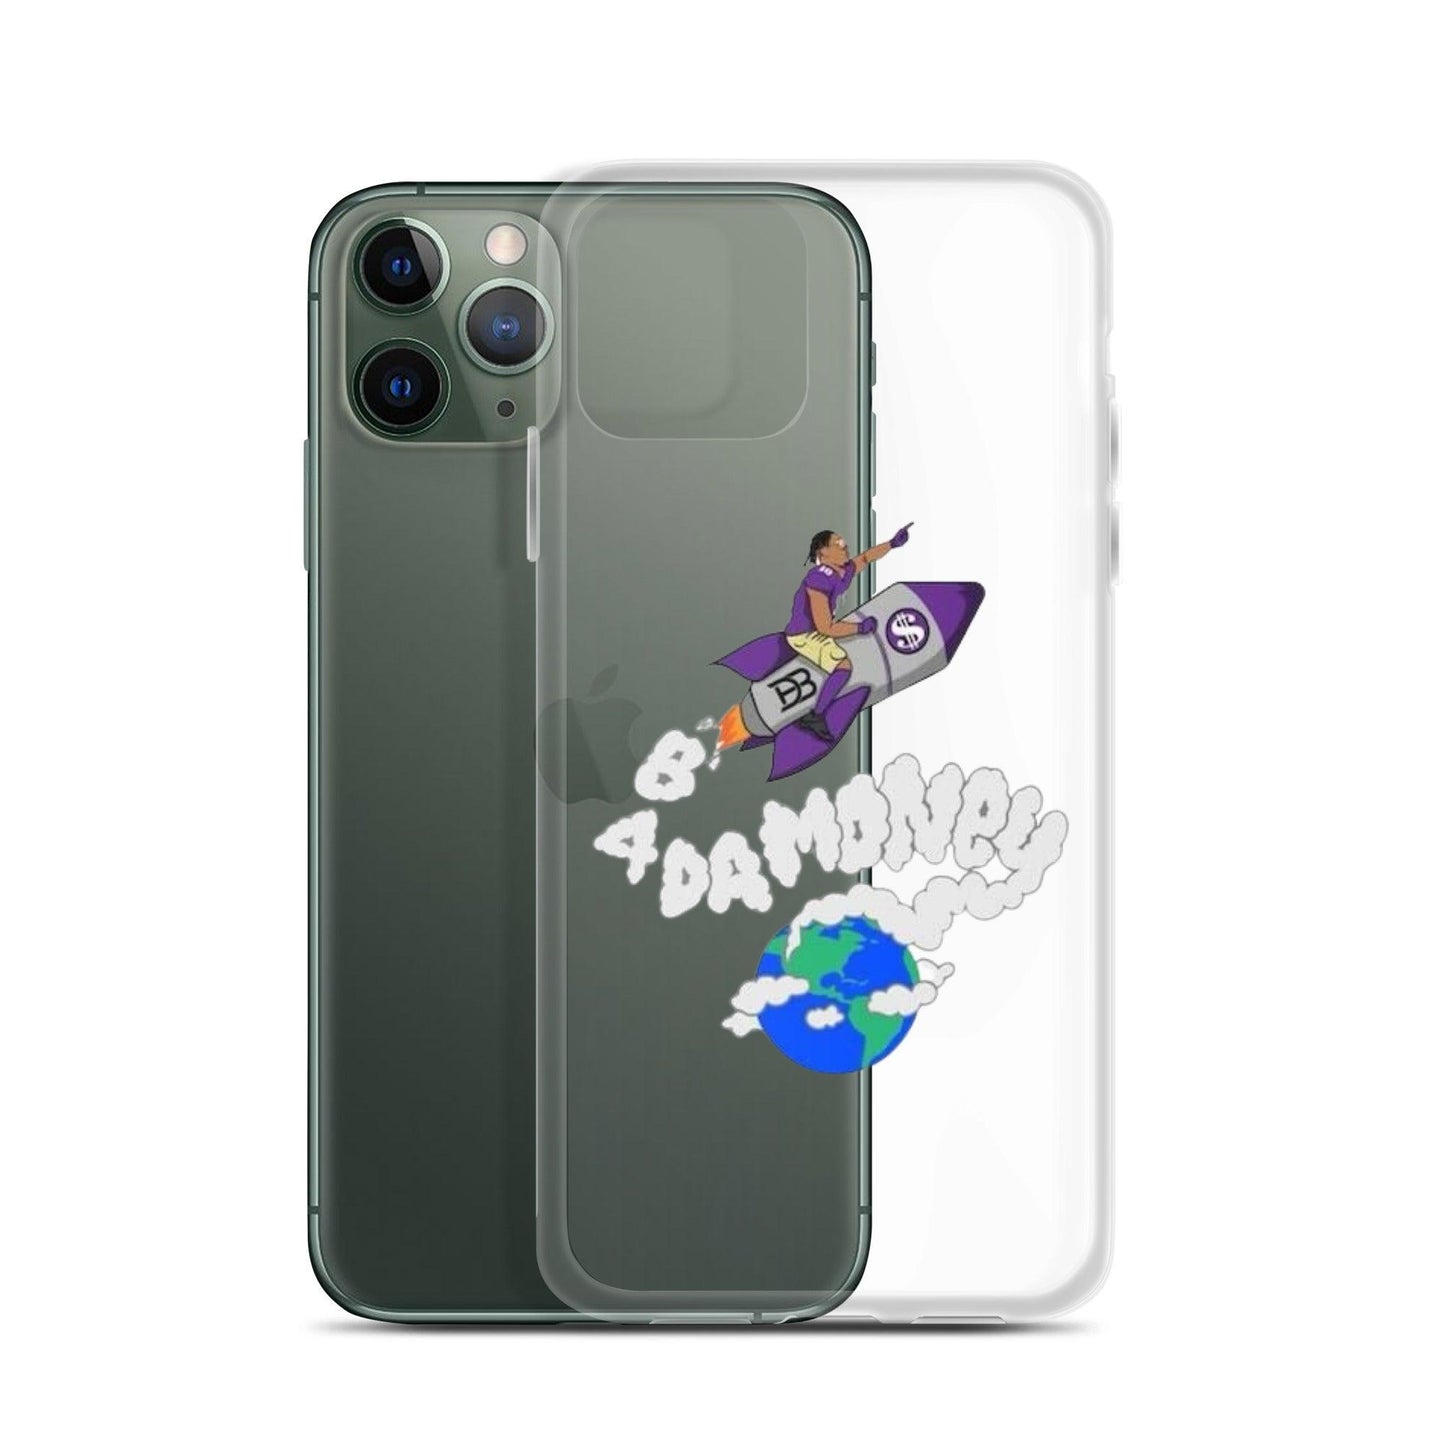 Davon Banks "B 4 DAMONEY" iPhone Case - Fan Arch